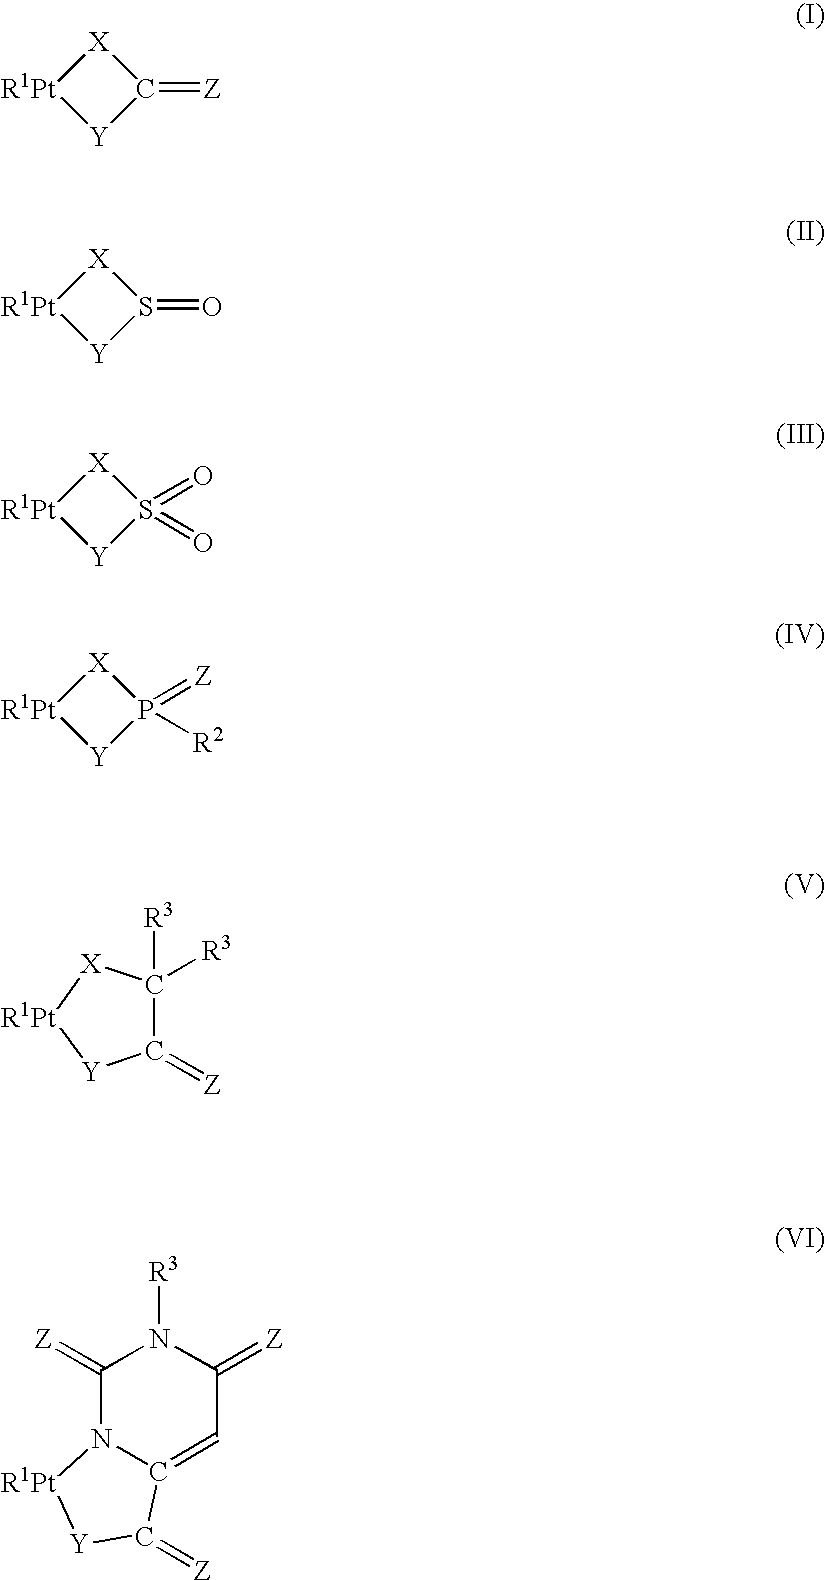 Crosslinkable polyorganosiloxane compositions